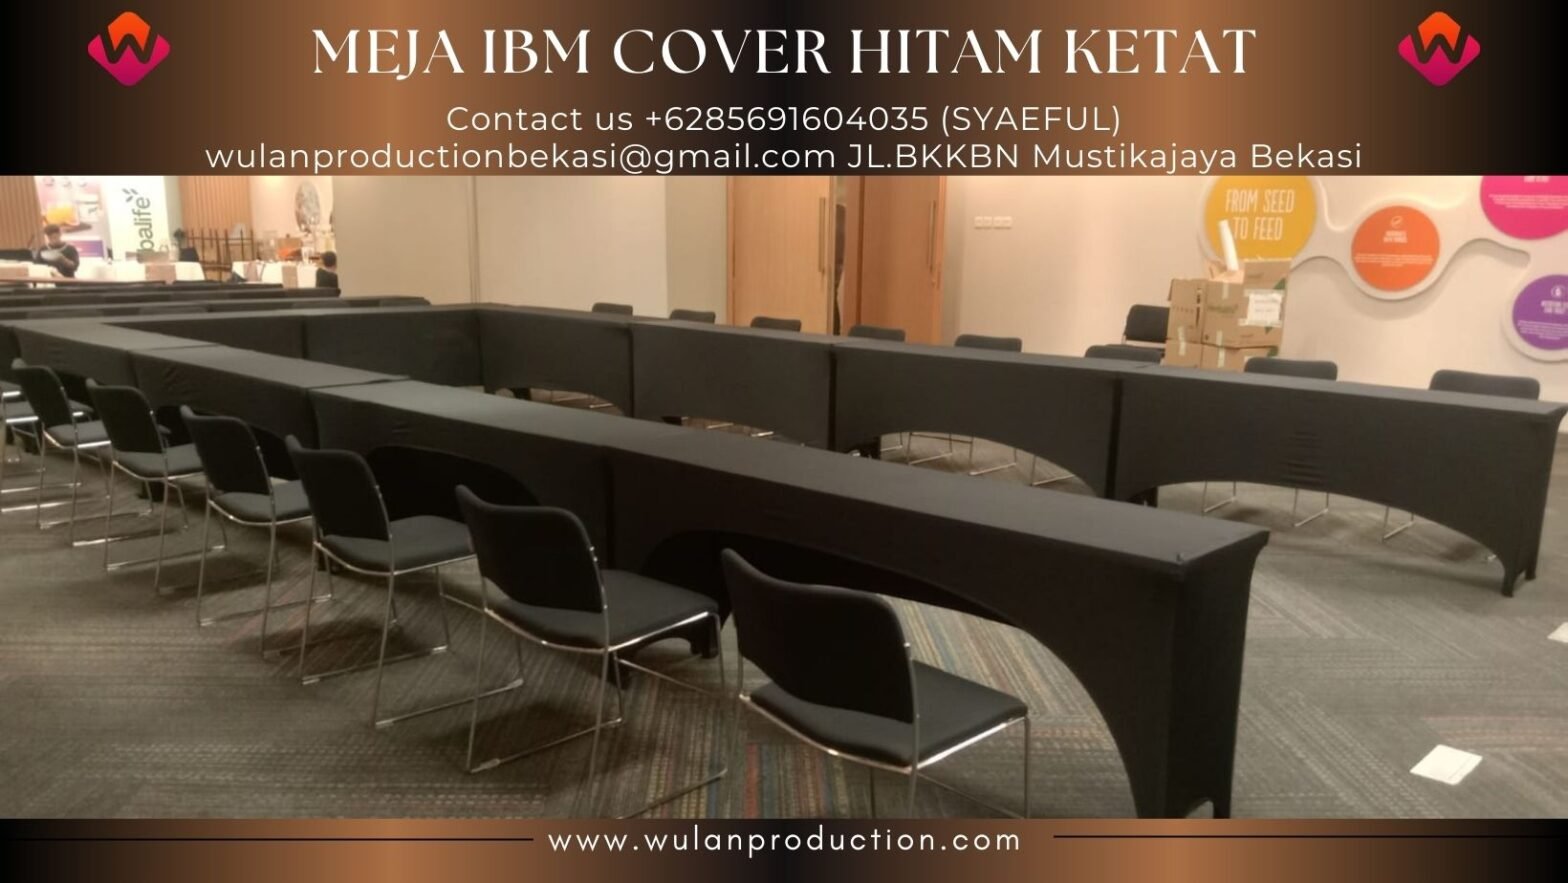 Sewa Meja IBM dengan Cover Ketat Hitam di Jakarta